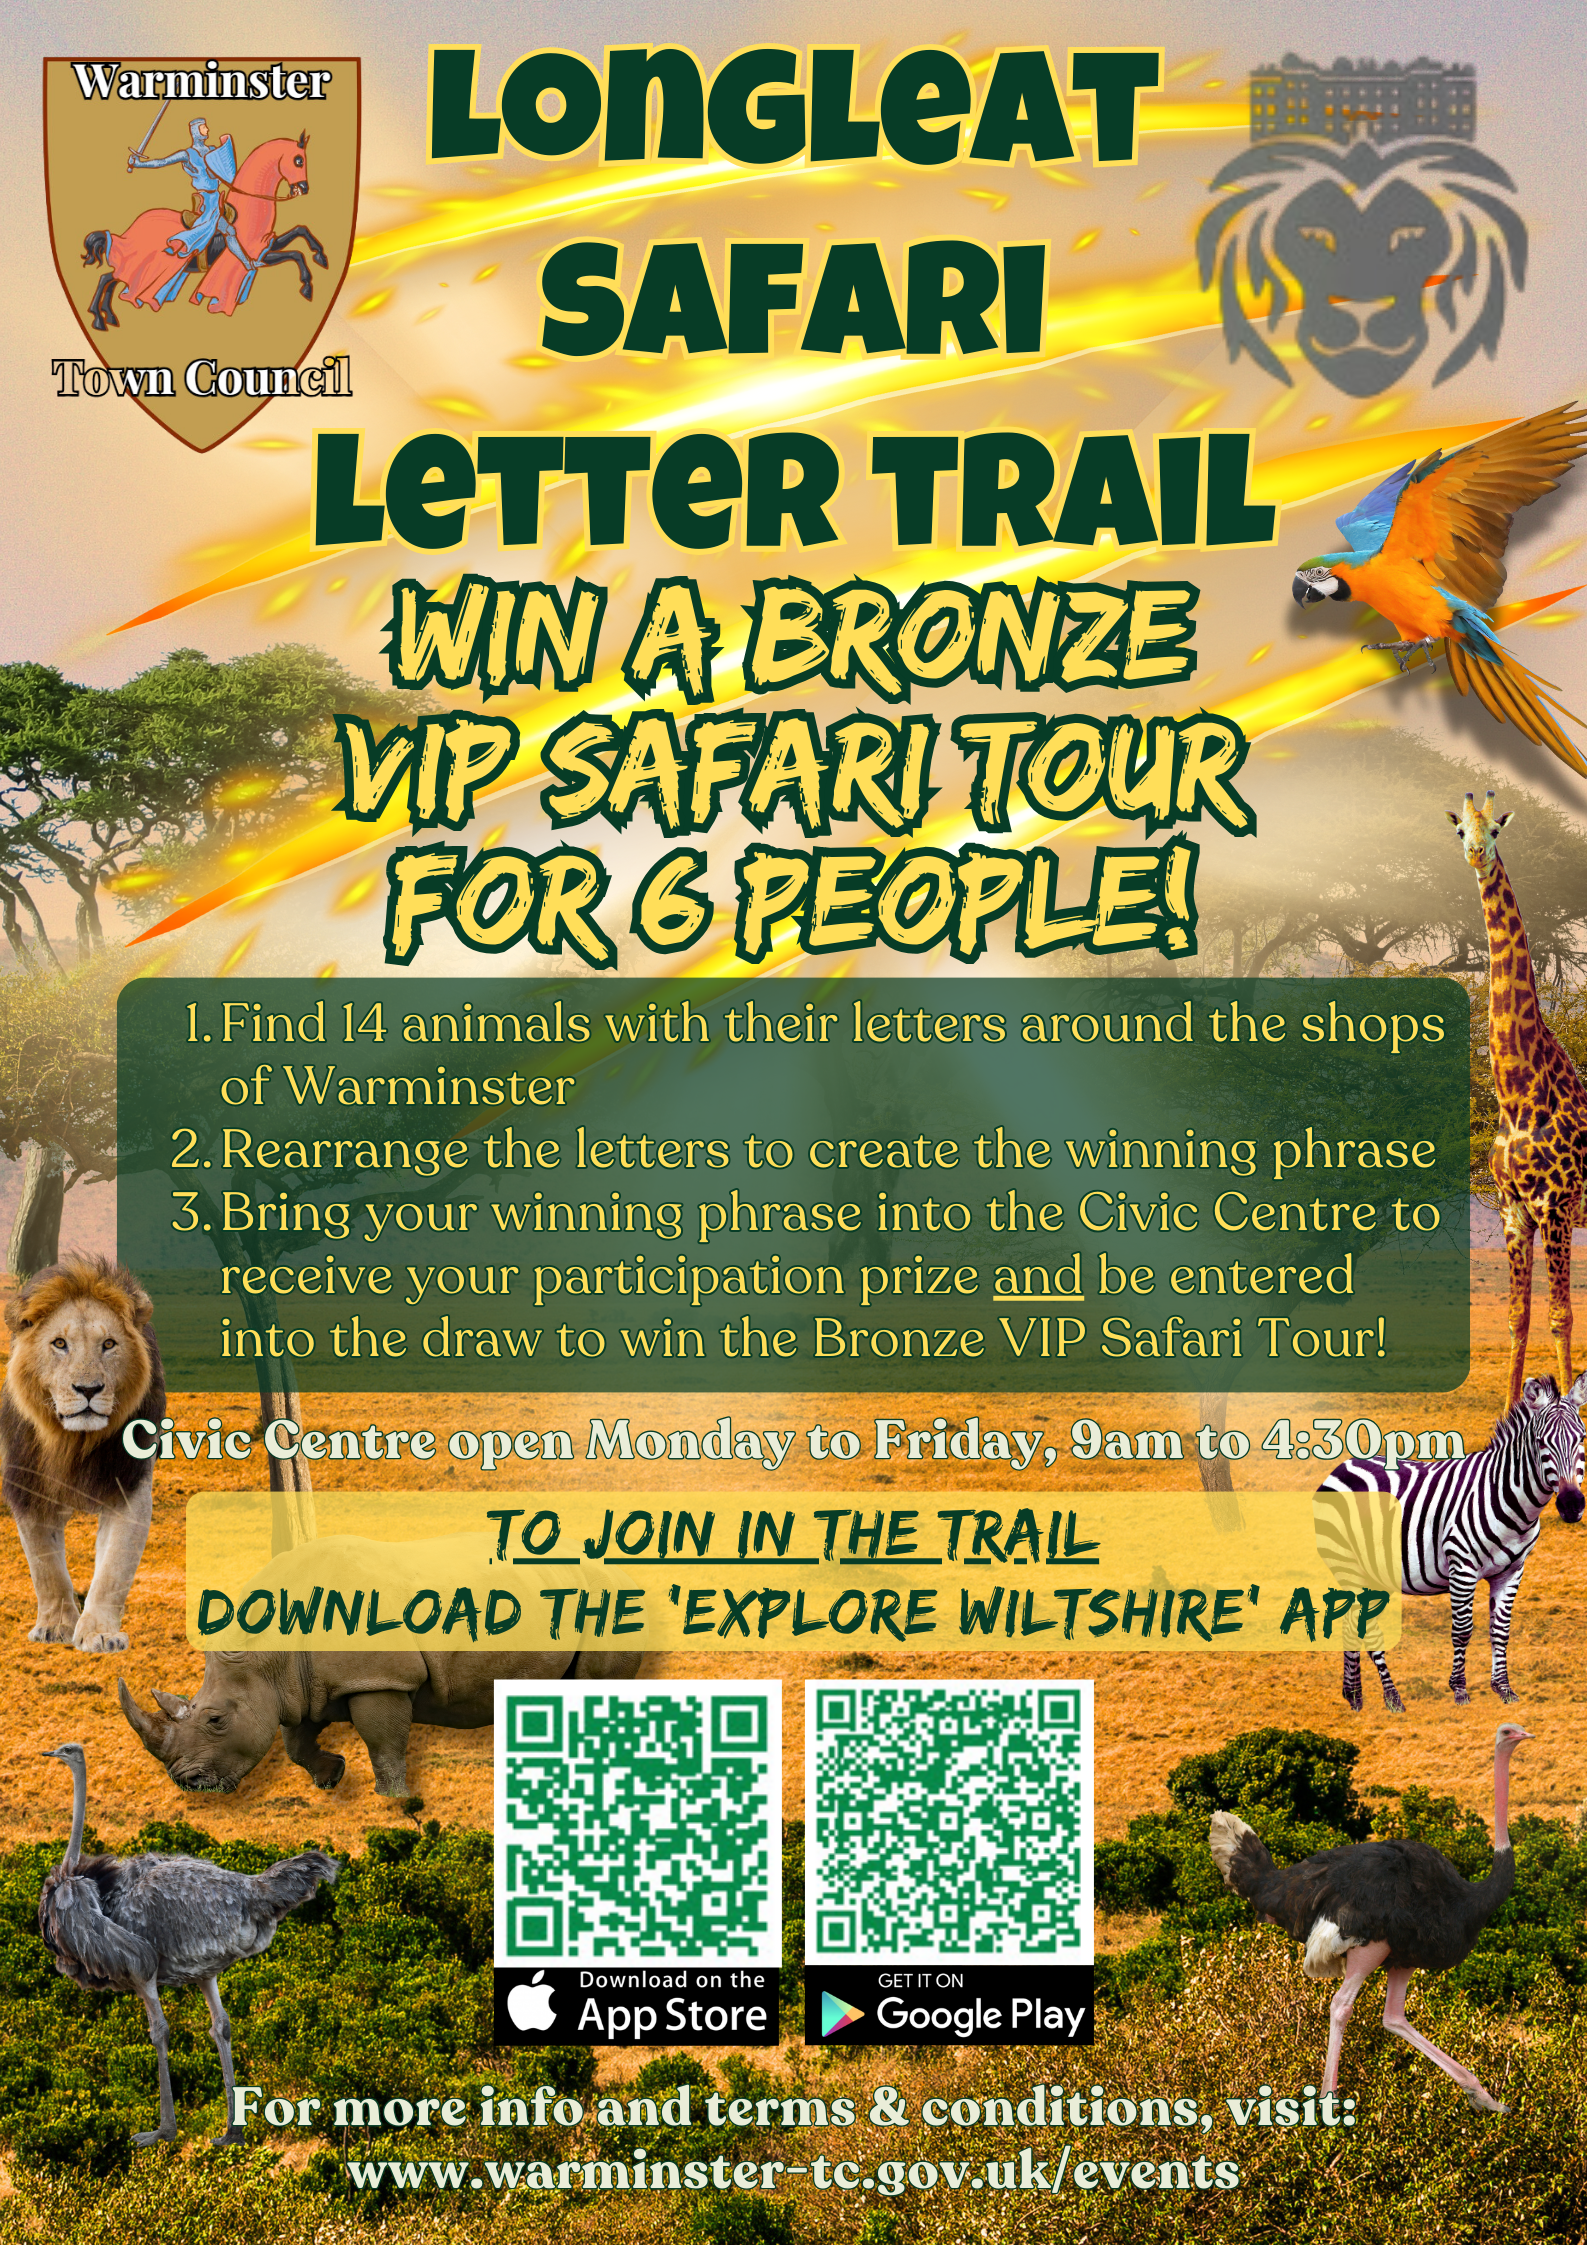 Longleat Safari Letter Trail